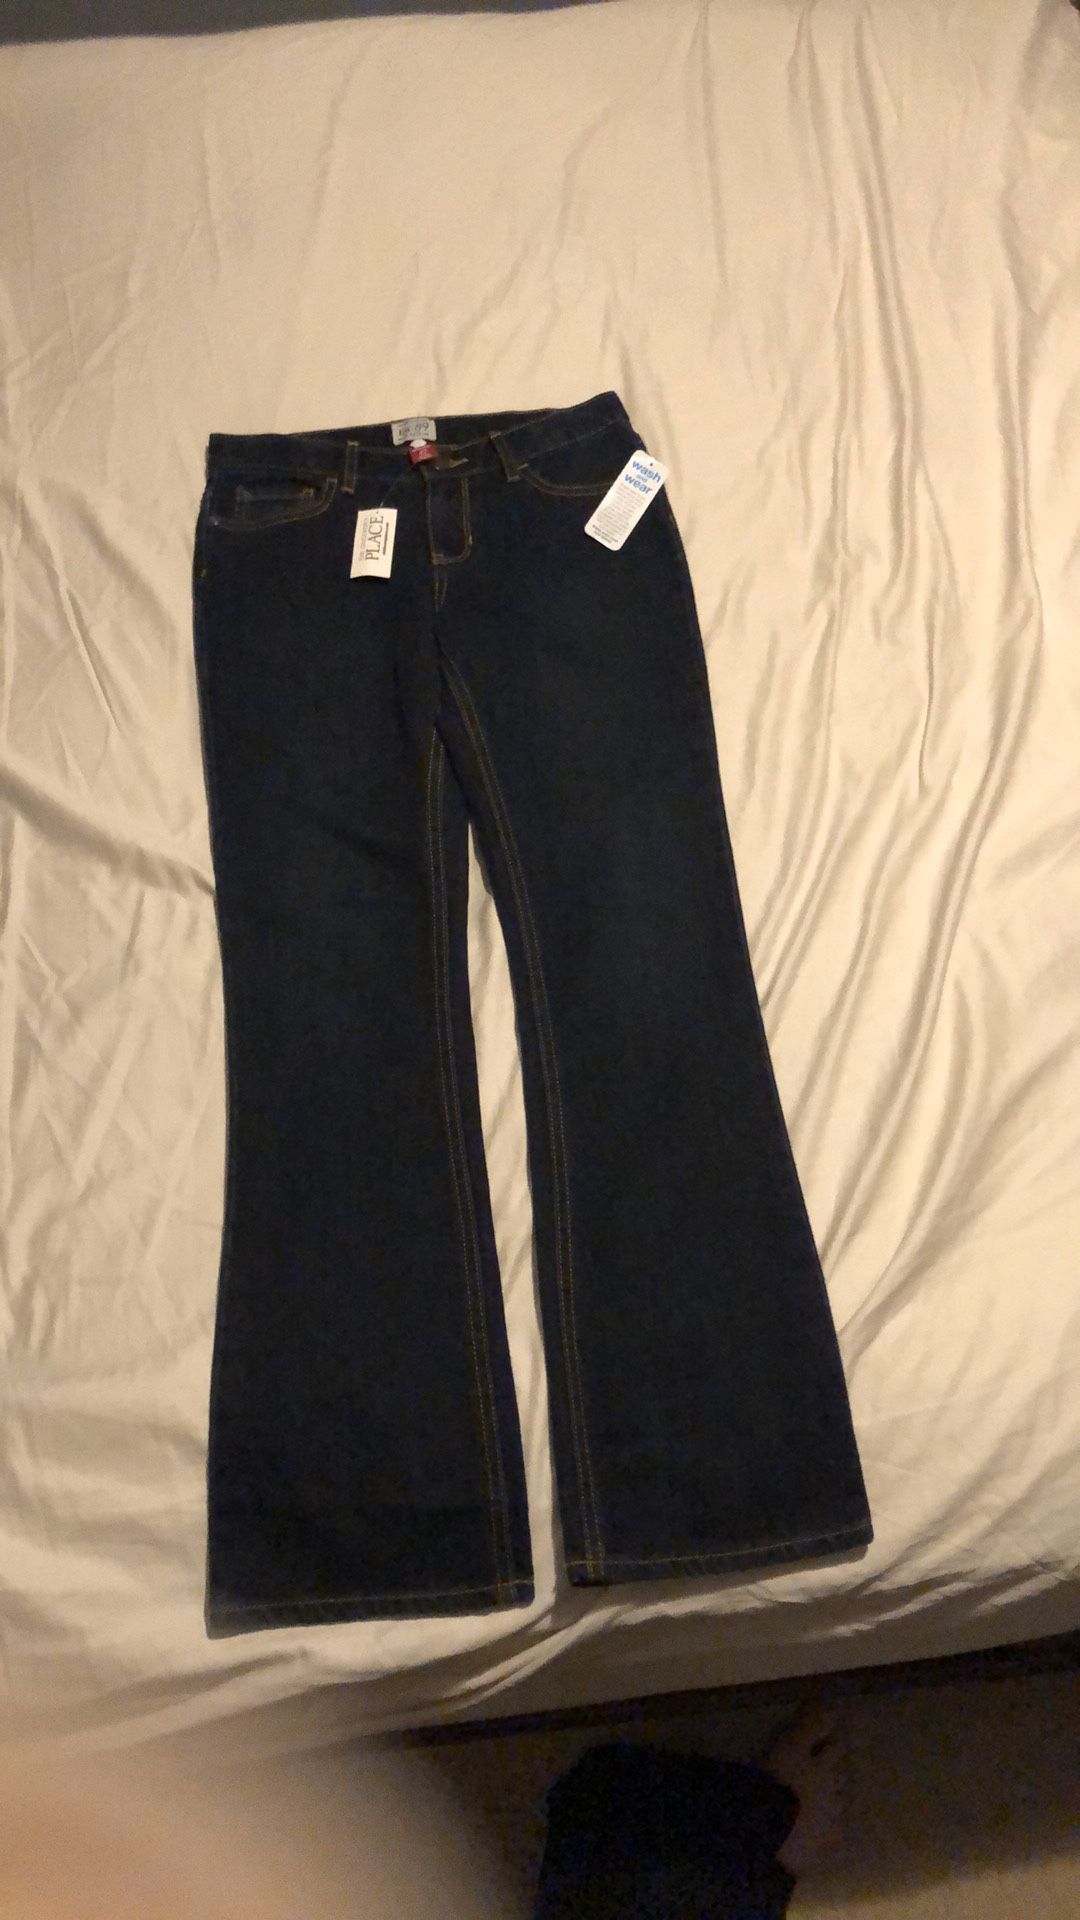 Brand new, girls dark blue boot cut jeans, size 12.